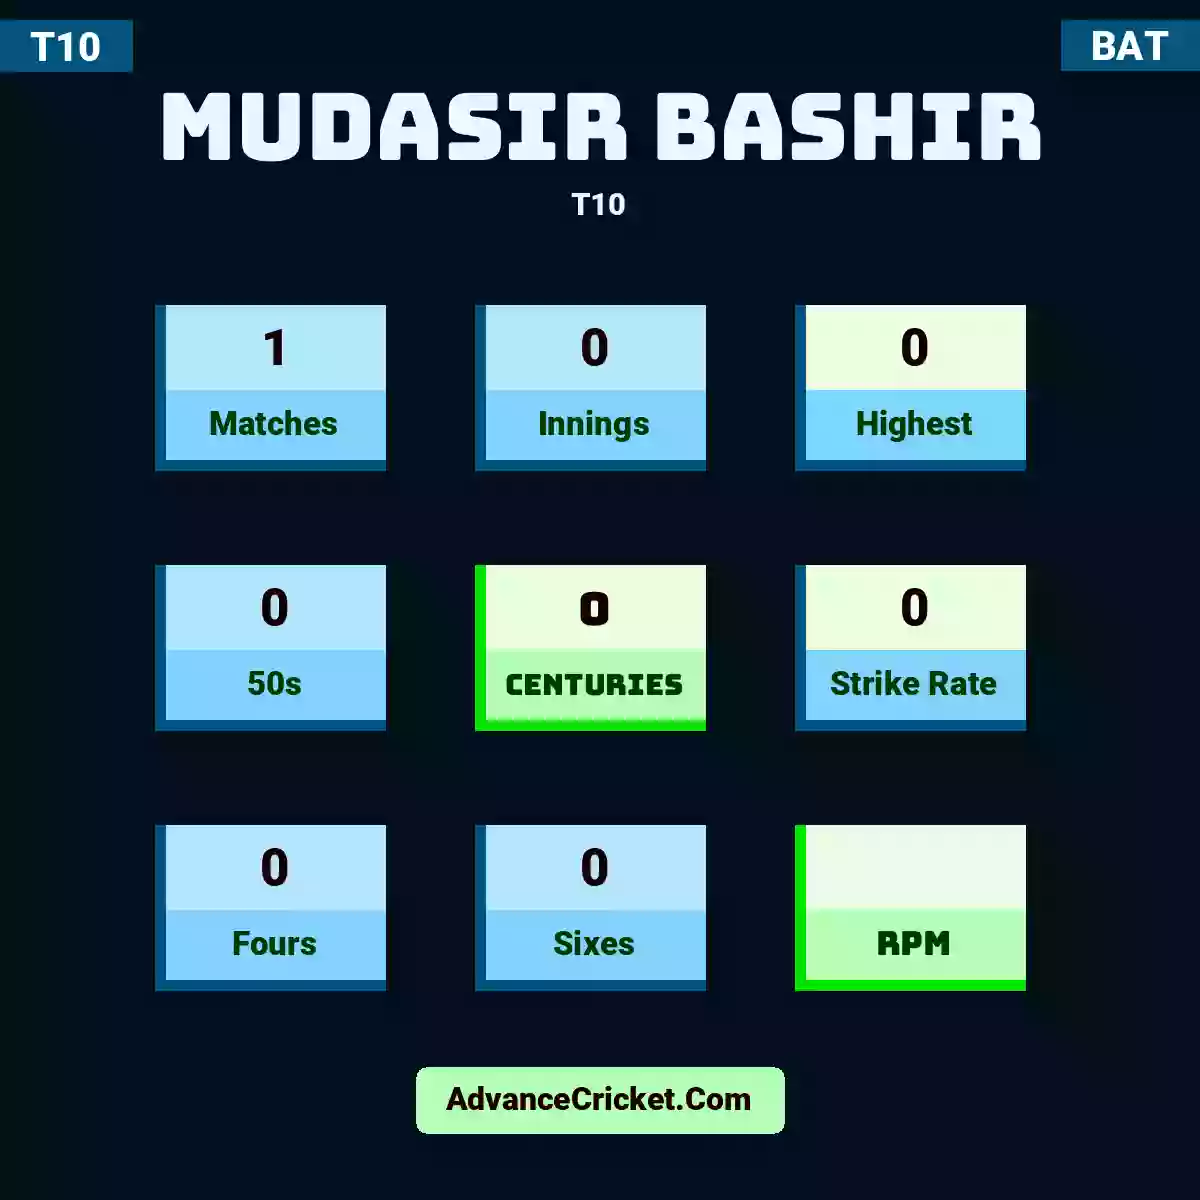 Mudasir Bashir T10 , Mudasir Bashir played 1 matches, scored 0 runs as highest, 0 half-centuries, and 0 centuries, with a strike rate of 0. M.Bashir hit 0 fours and 0 sixes.